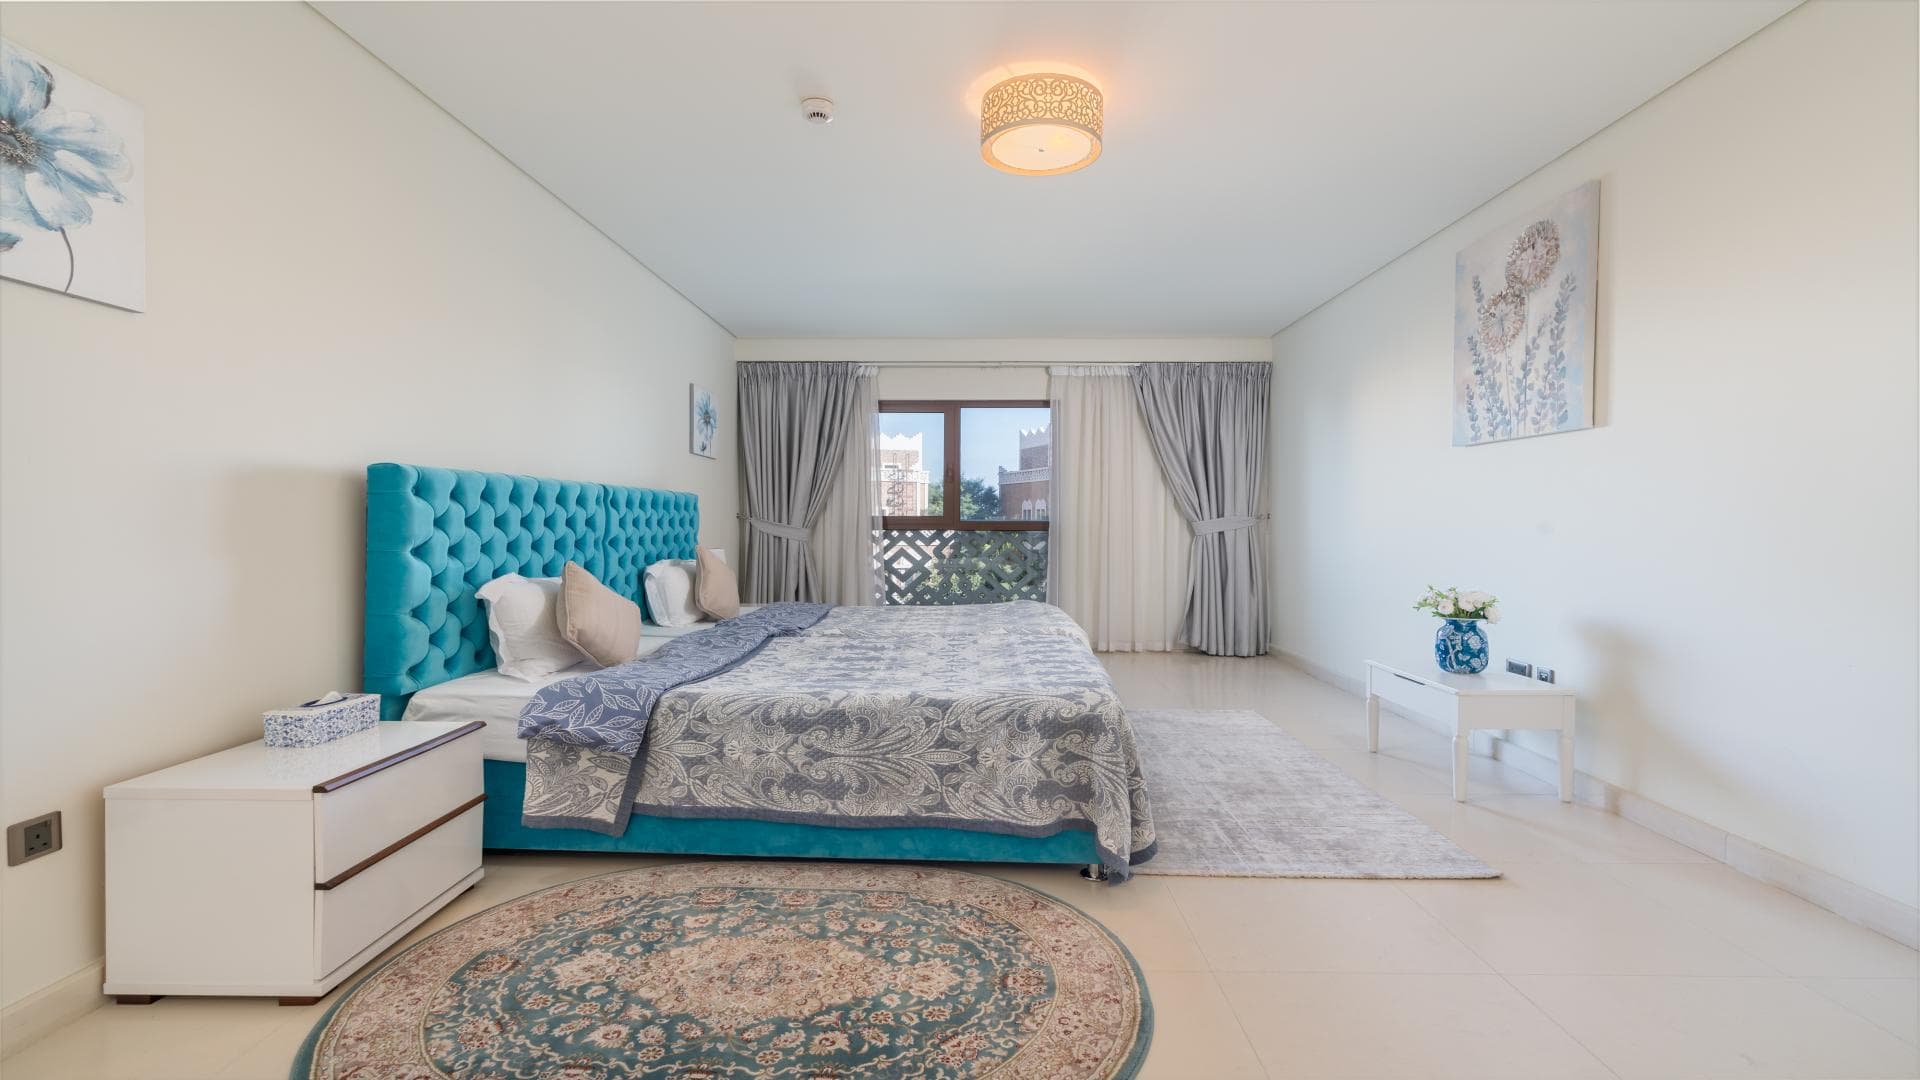 2 Bedroom Apartment For Rent Kingdom Of Sheba Lp19542 159e57fe2313a300.jpg